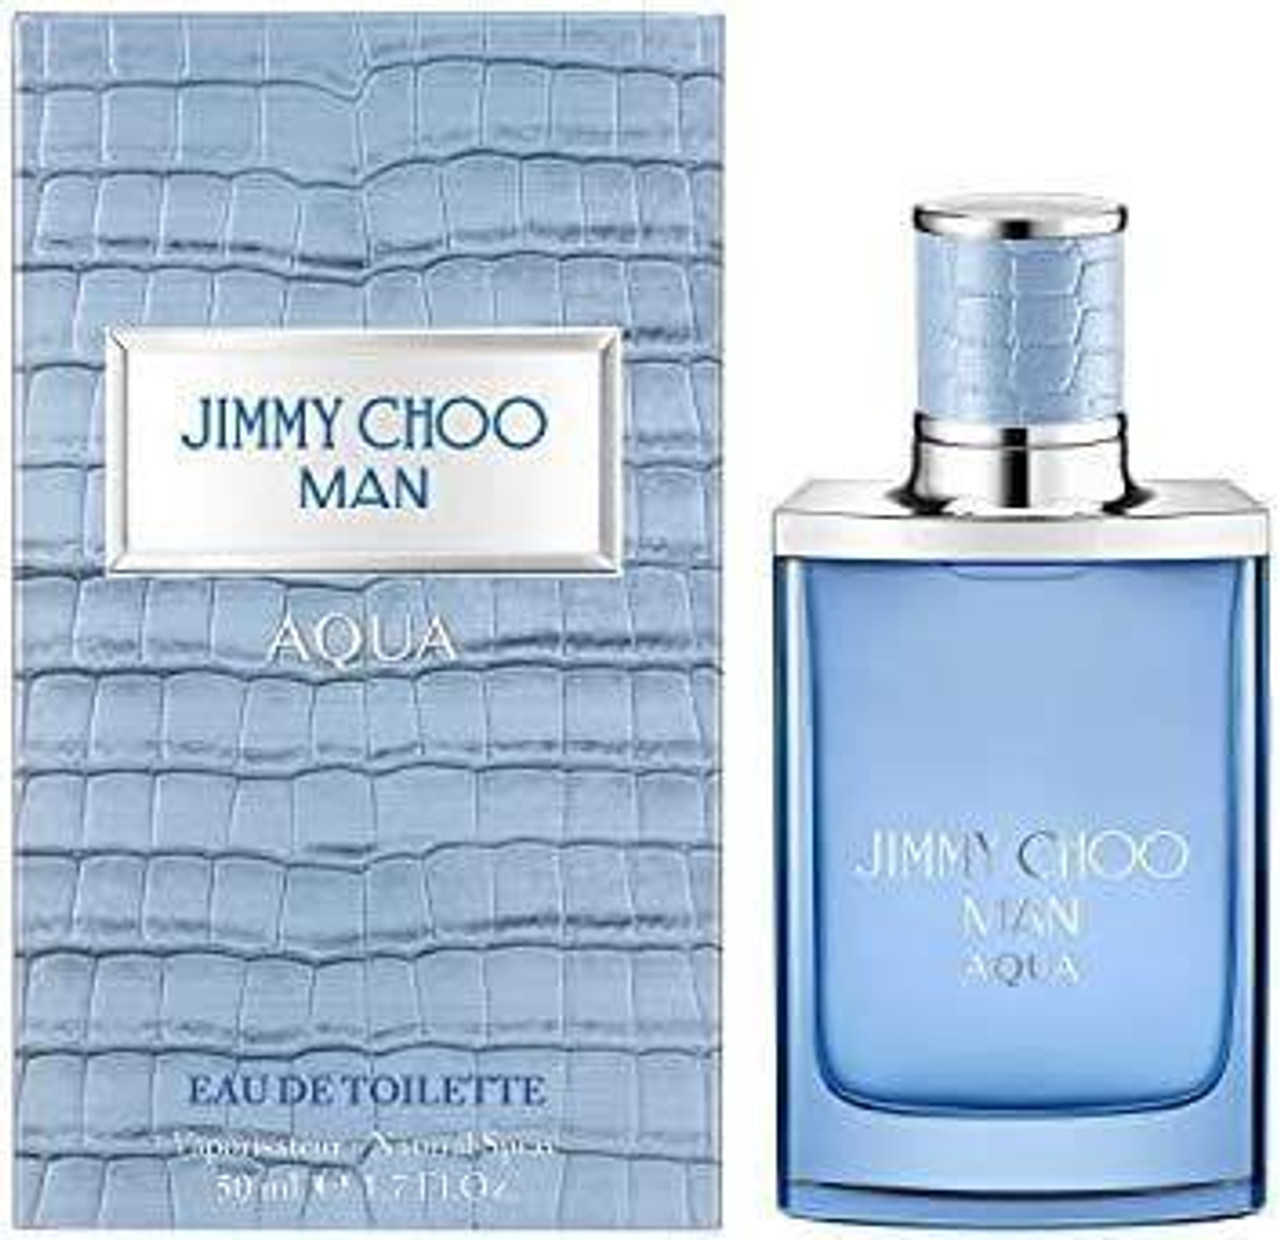 Jimmy Choo Man Blue Eau de toilette for men